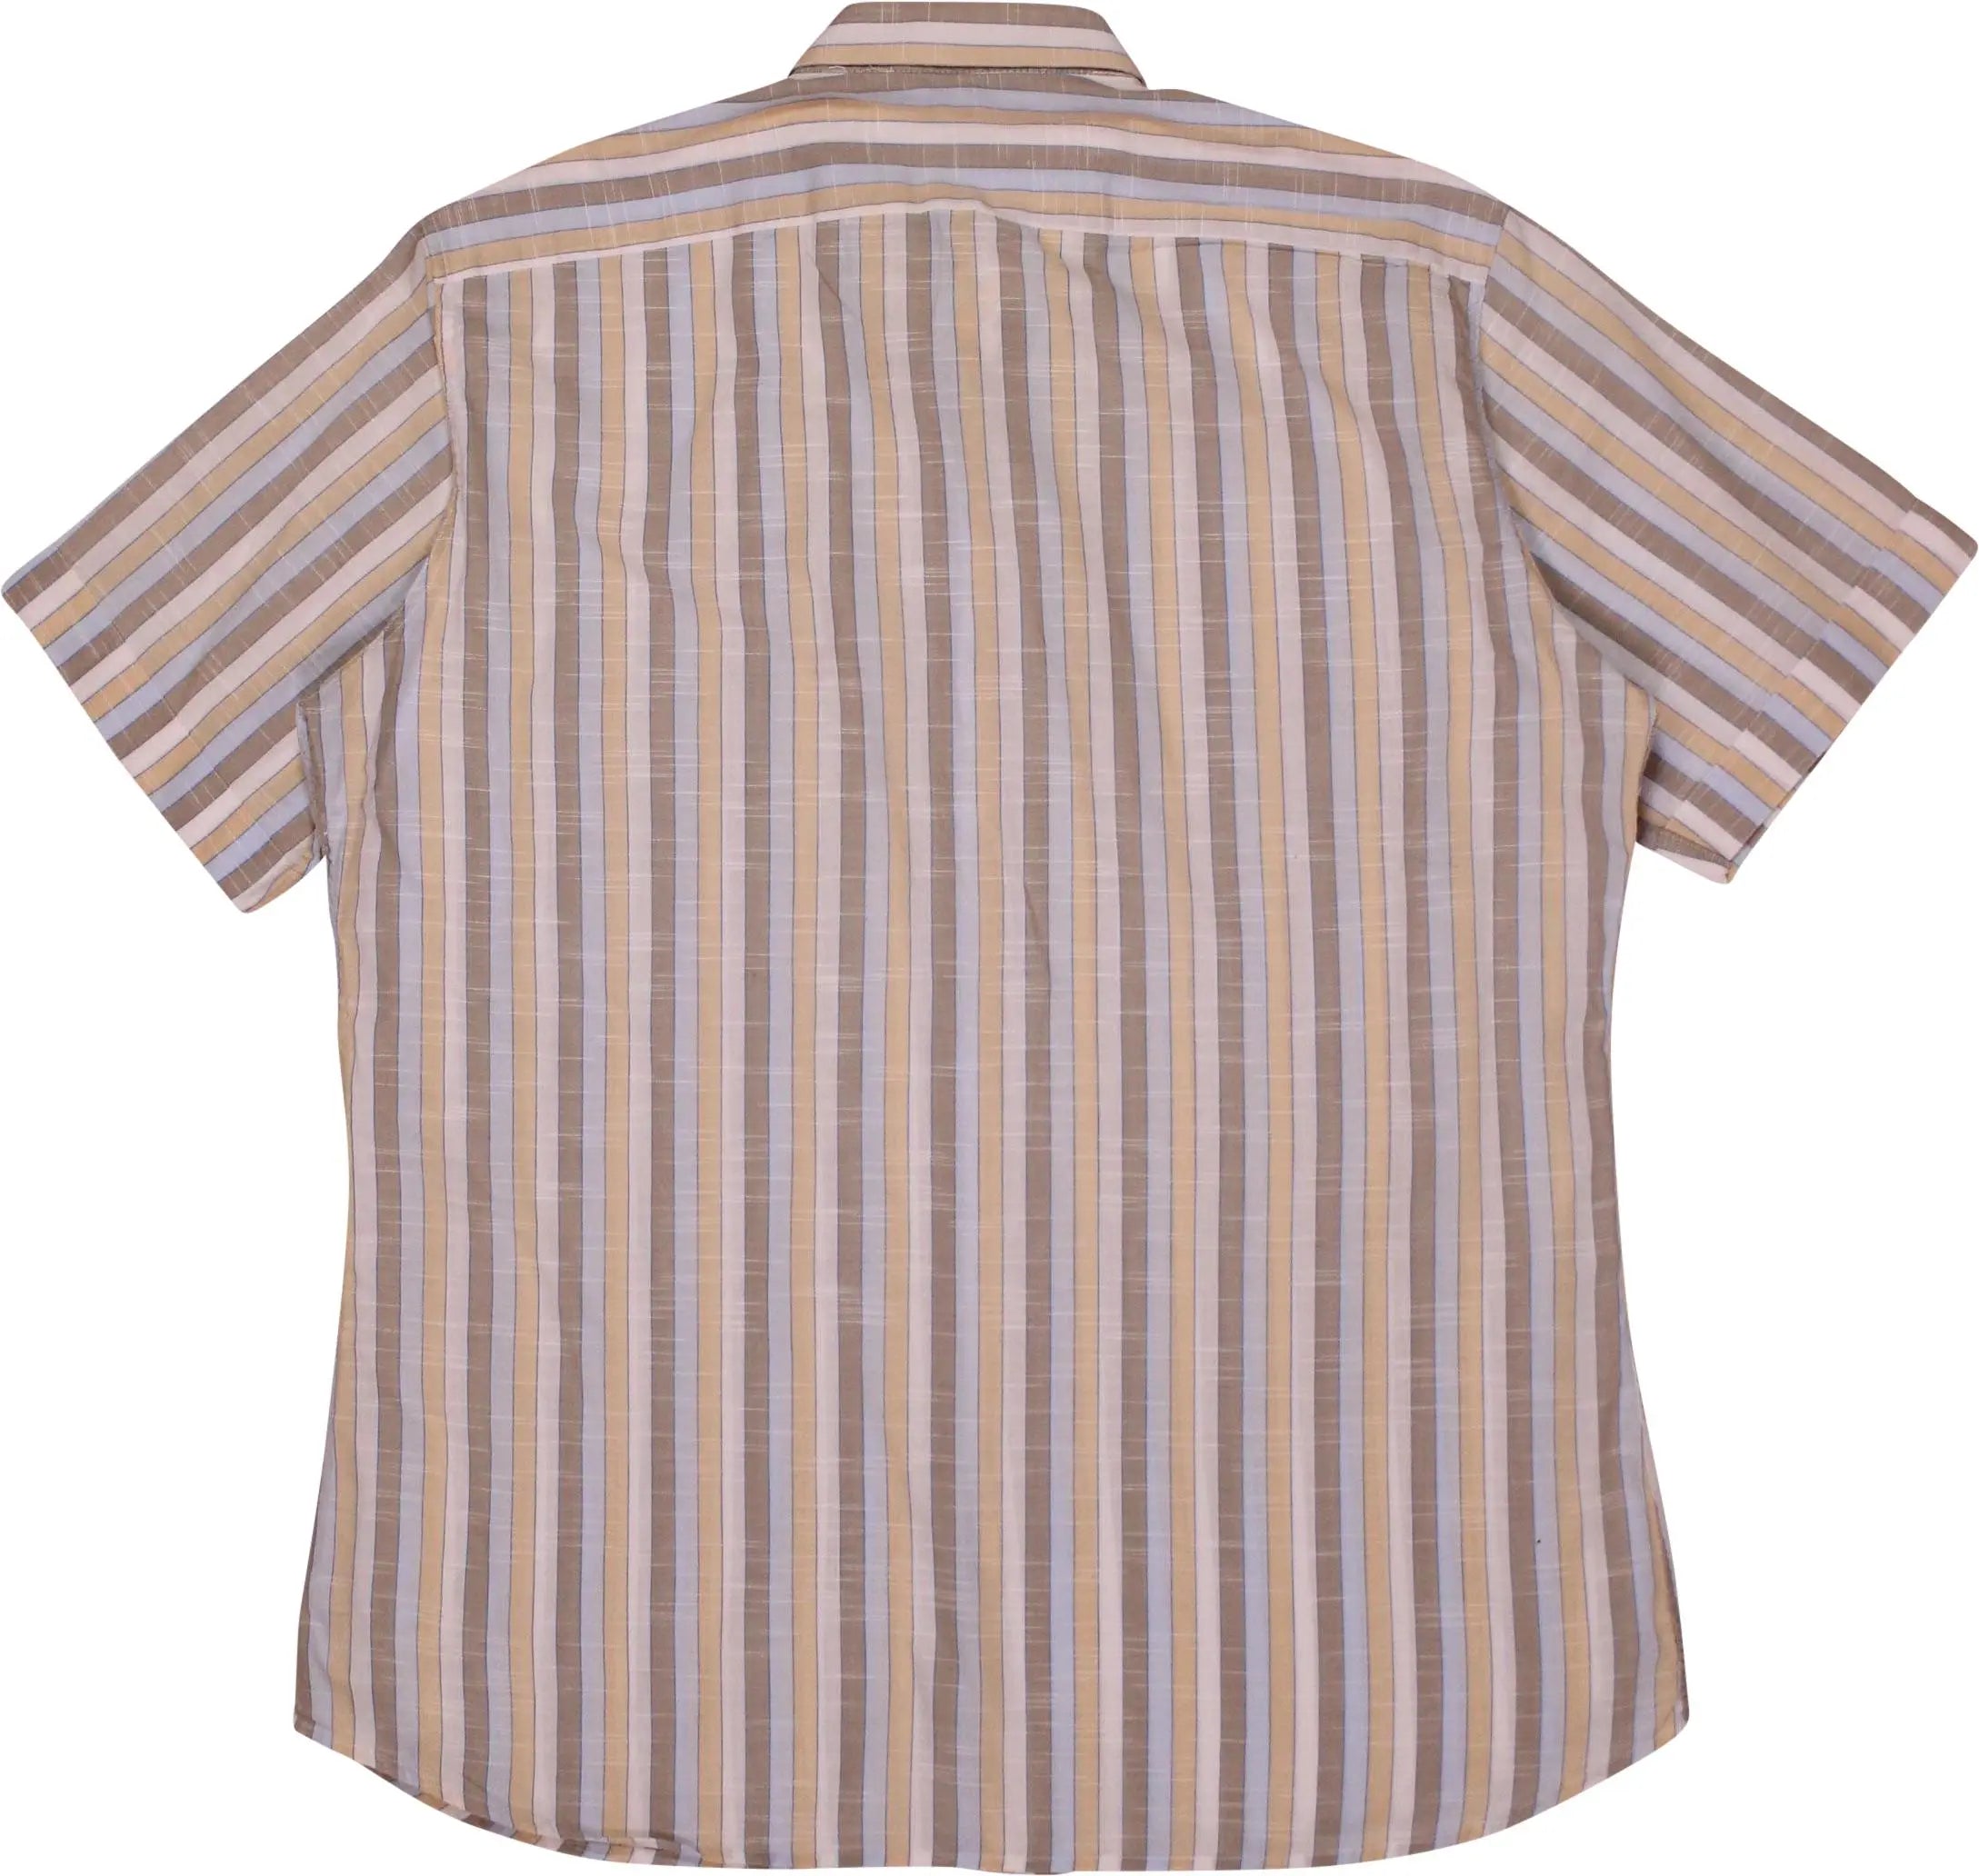 Ellex - Short Sleeve Striped Shirt- ThriftTale.com - Vintage and second handclothing